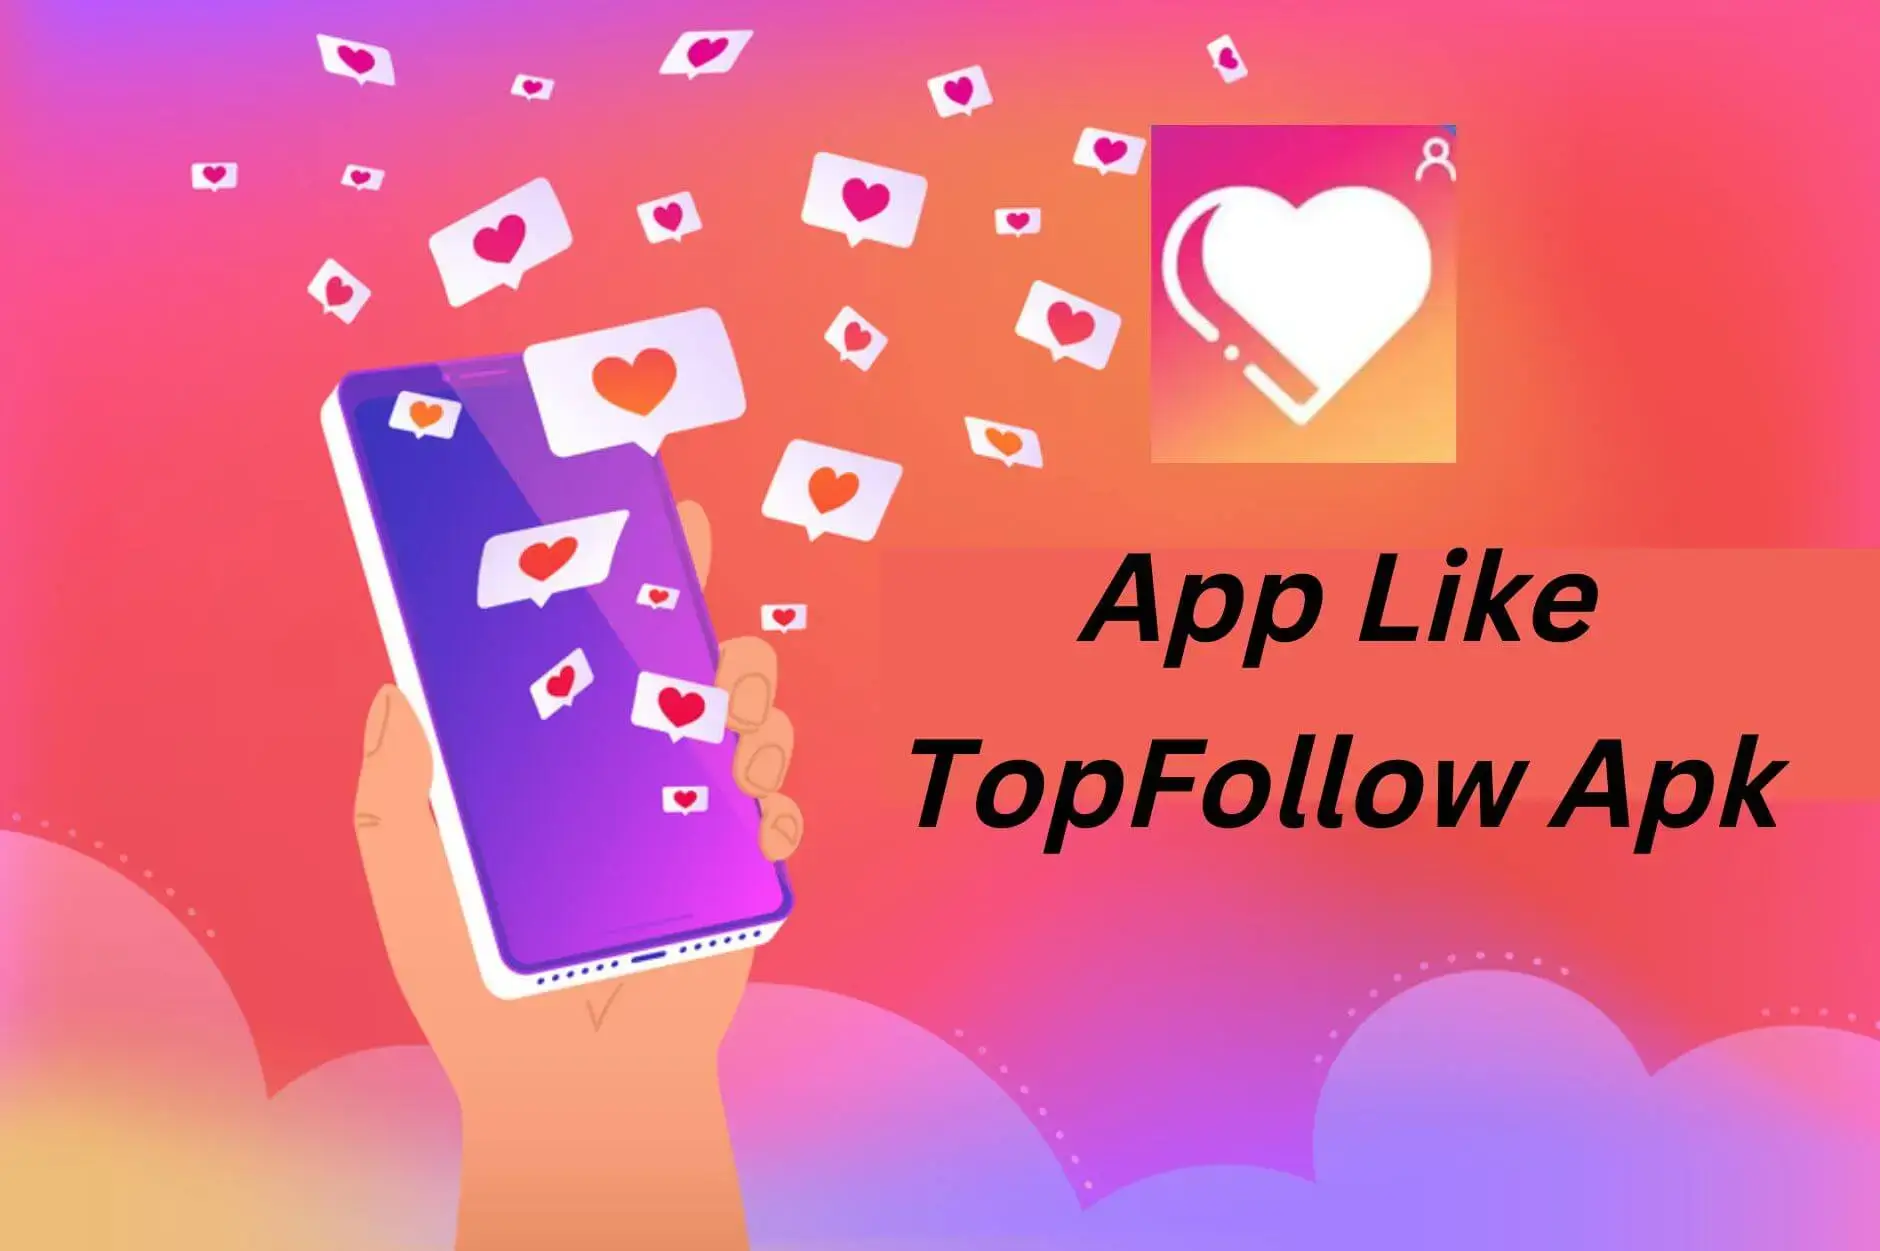 App Like TopFollow